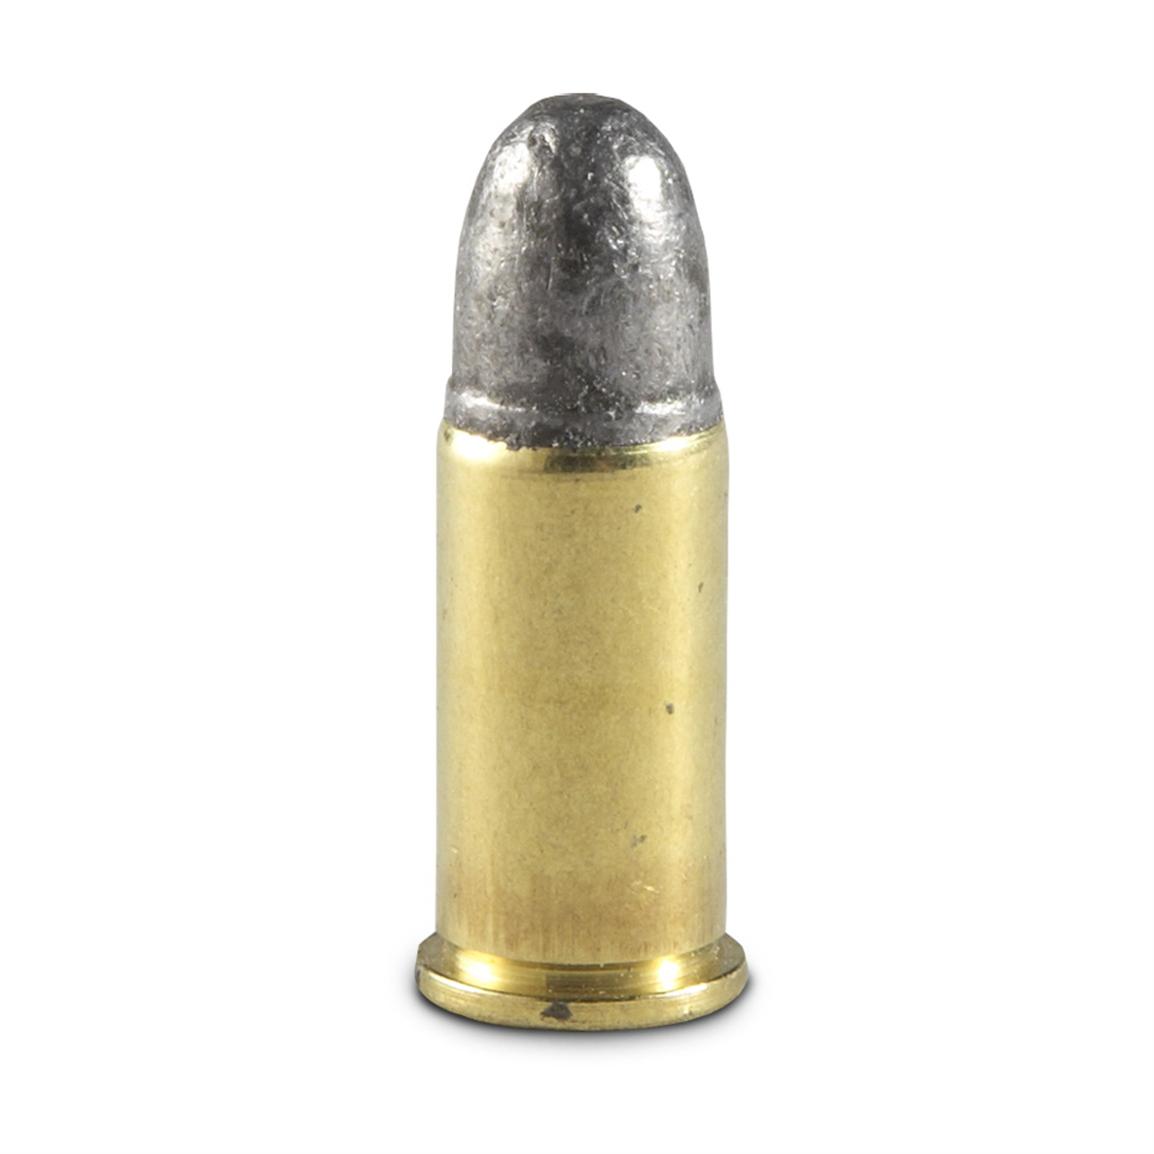 remington-32-smith-wesson-lrn-88-grain-50-rounds-283134-32-s